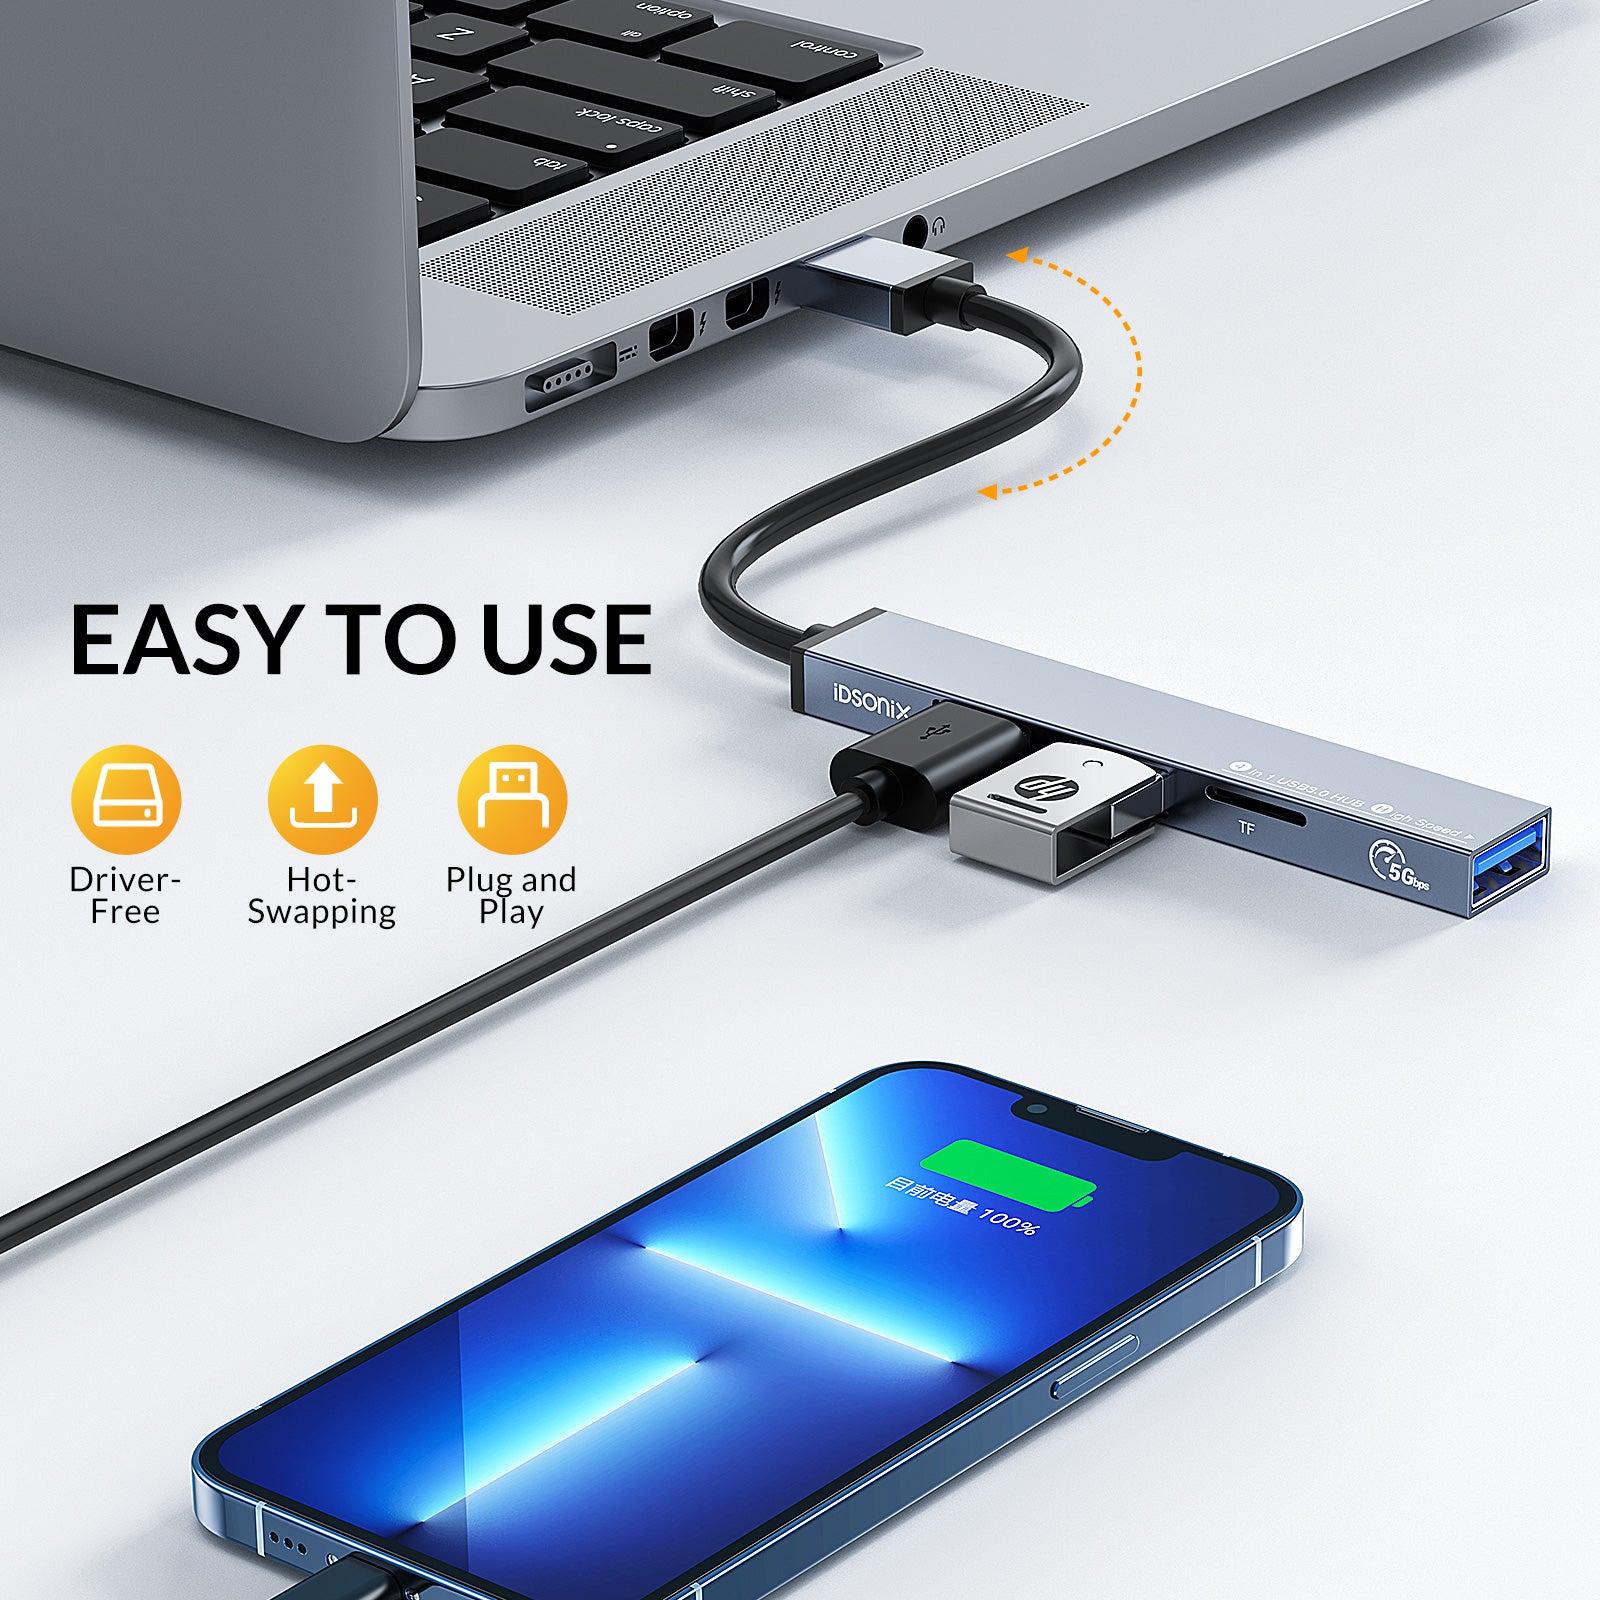 Mini USB Hub, iDsonix 4 Port USB 3.0 Hub, USB Hub Multiport Adapter Aluminum Shell with USB3.0,3*USB 2.0, 1 TF Card Slot for Laptop, Compatible with iMac, MacBook Pro, Mac, Surface, iPad Pro, XPS, PC